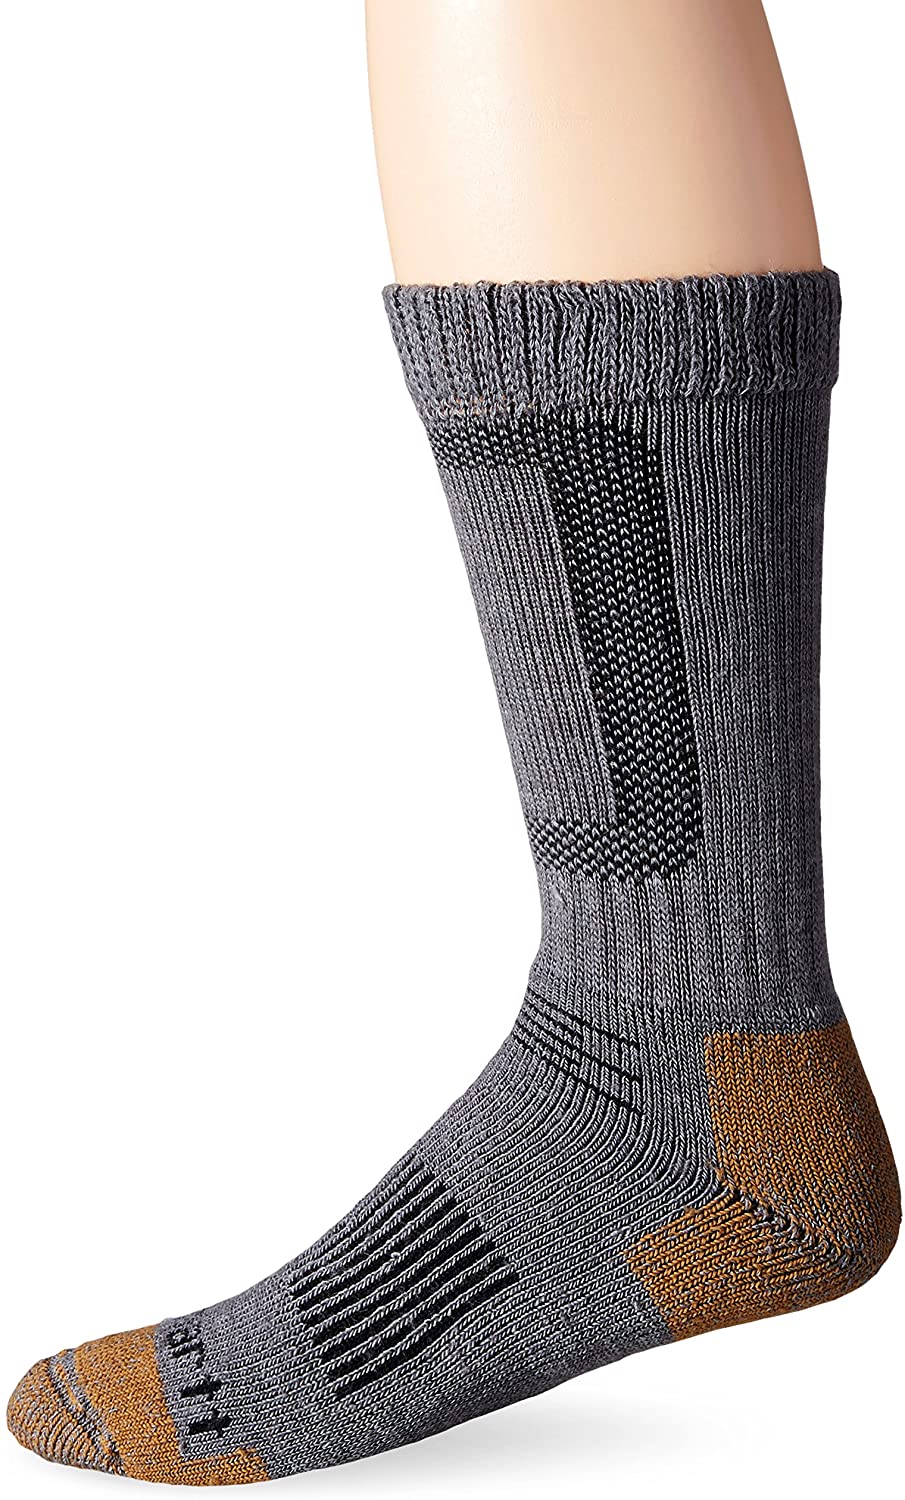 Carhartt Men's Merino Wool Comfort-Stretch Steel Toe Socks | eBay